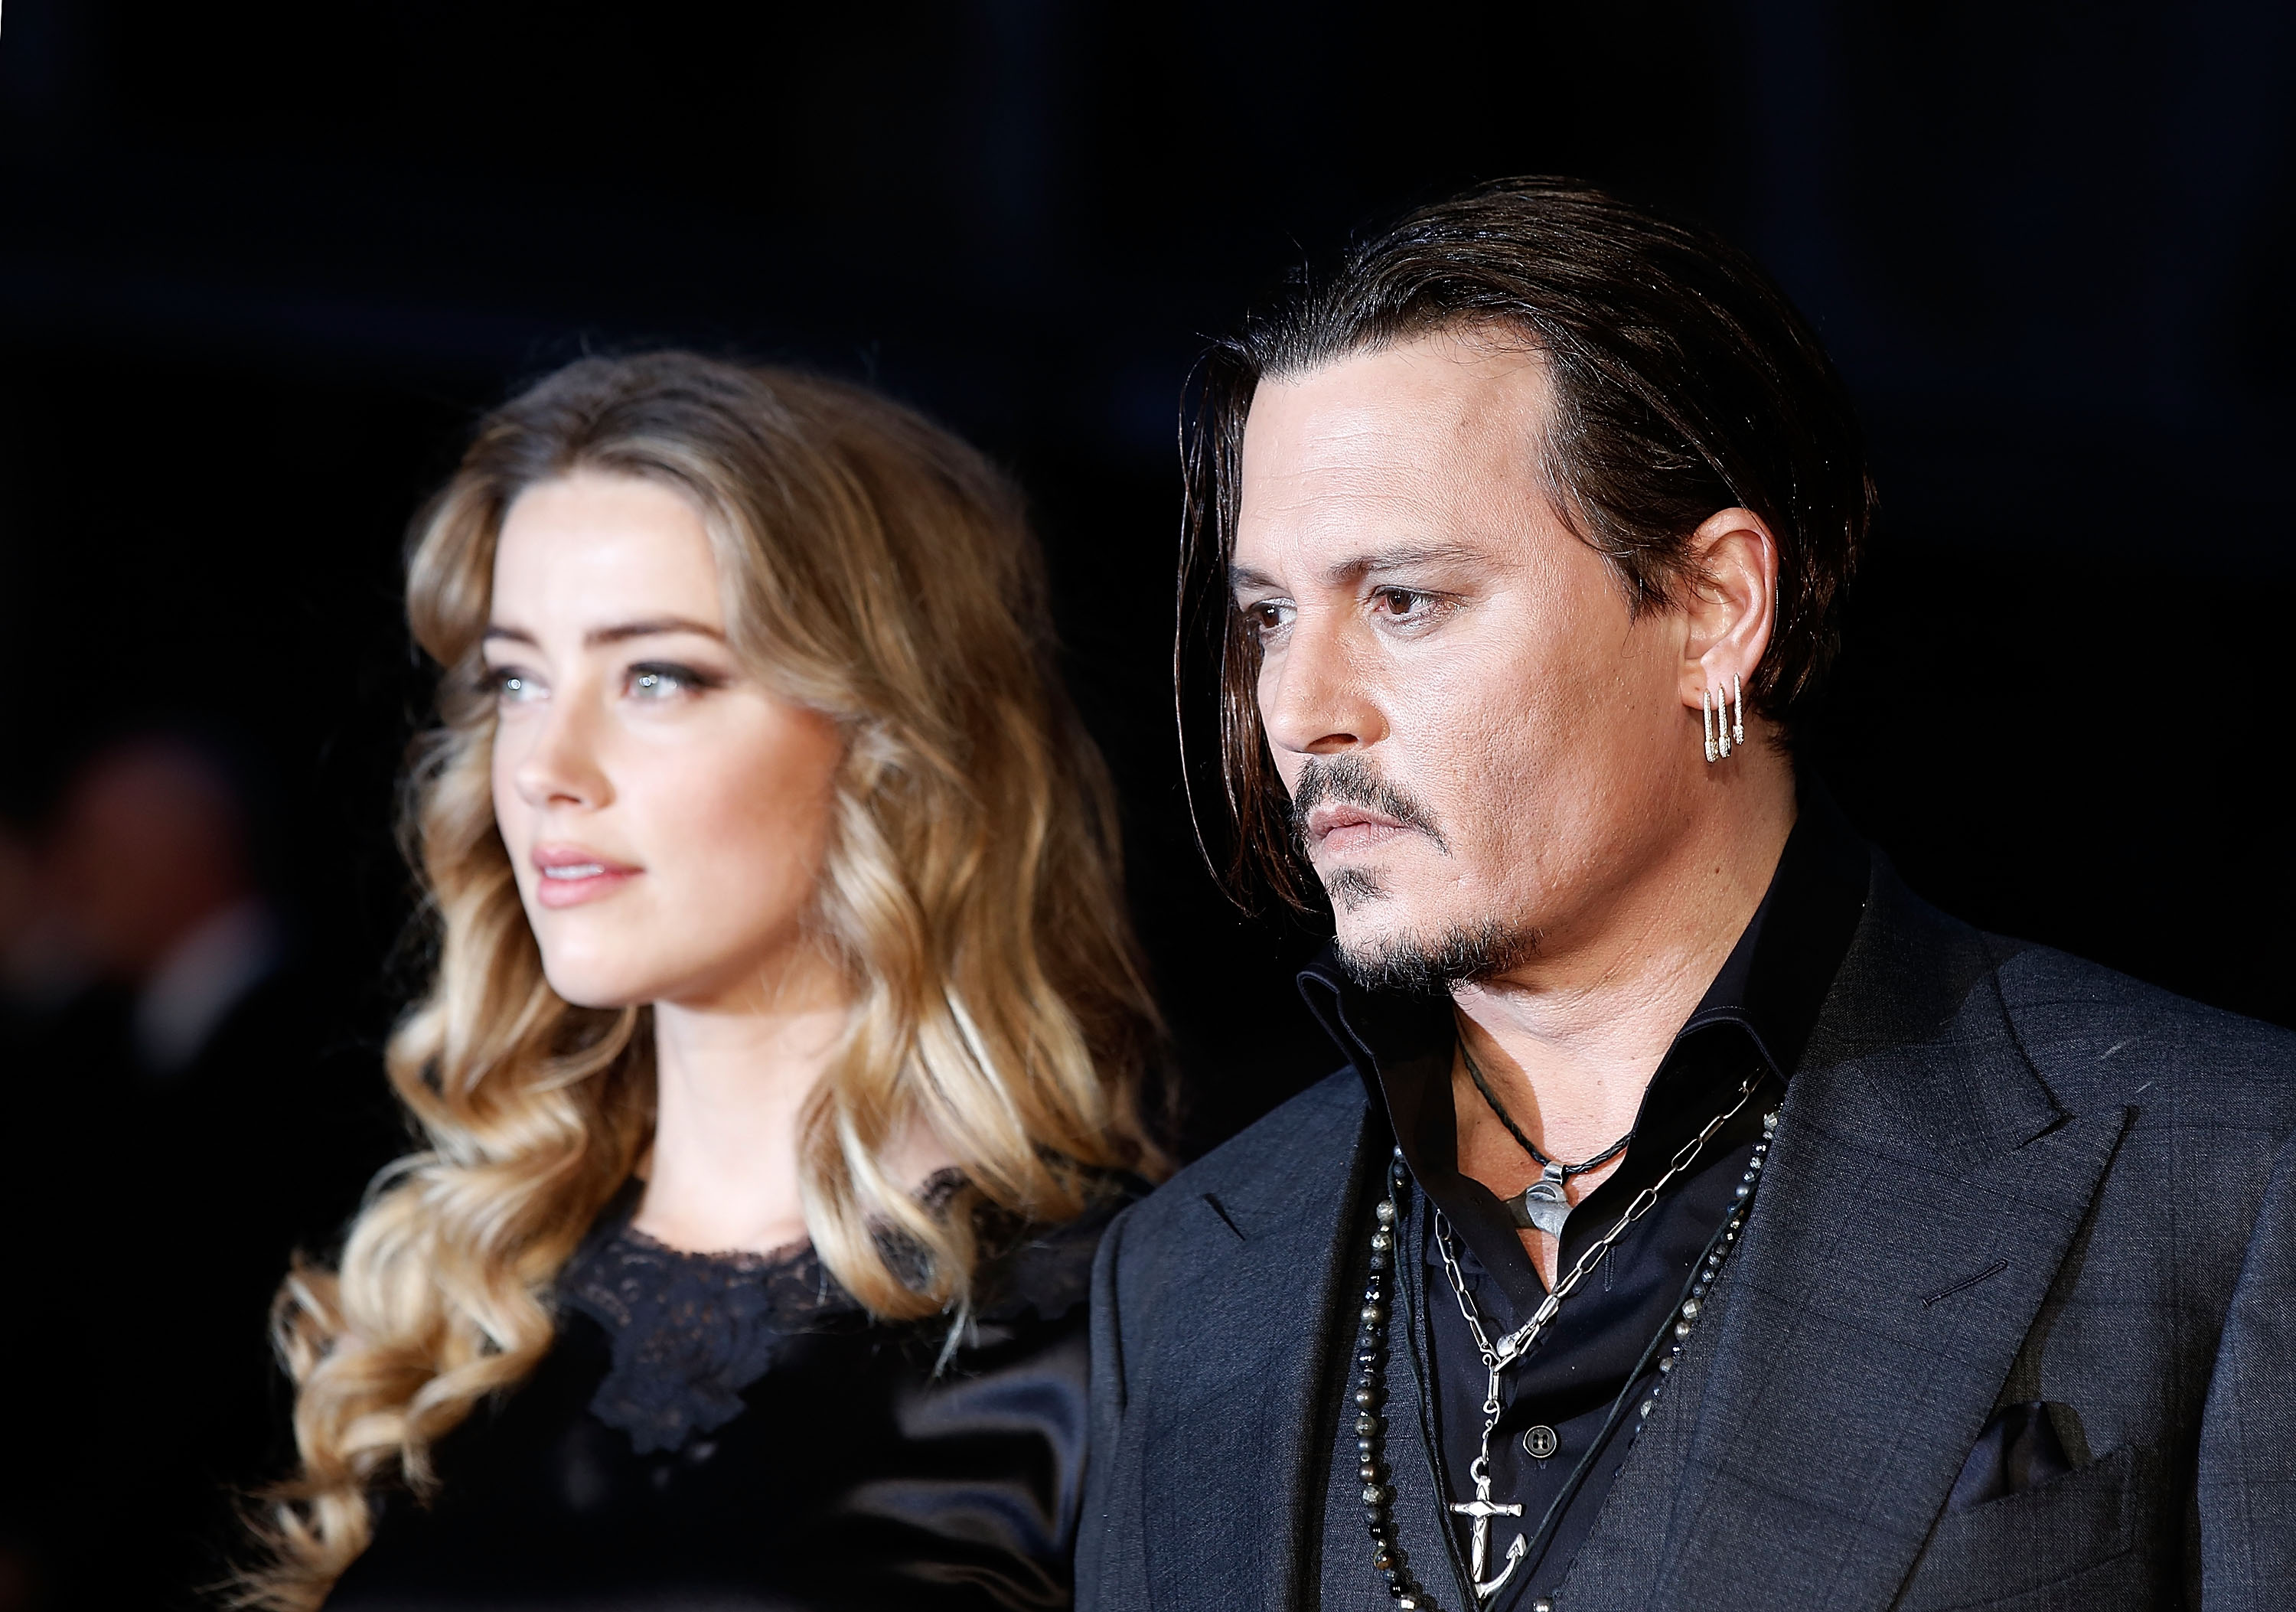 Amber Heard et Johnny Depp à l'Odeon Leicester Square le 11 octobre 2015 à Londres, Angleterre. | Source : Getty Images